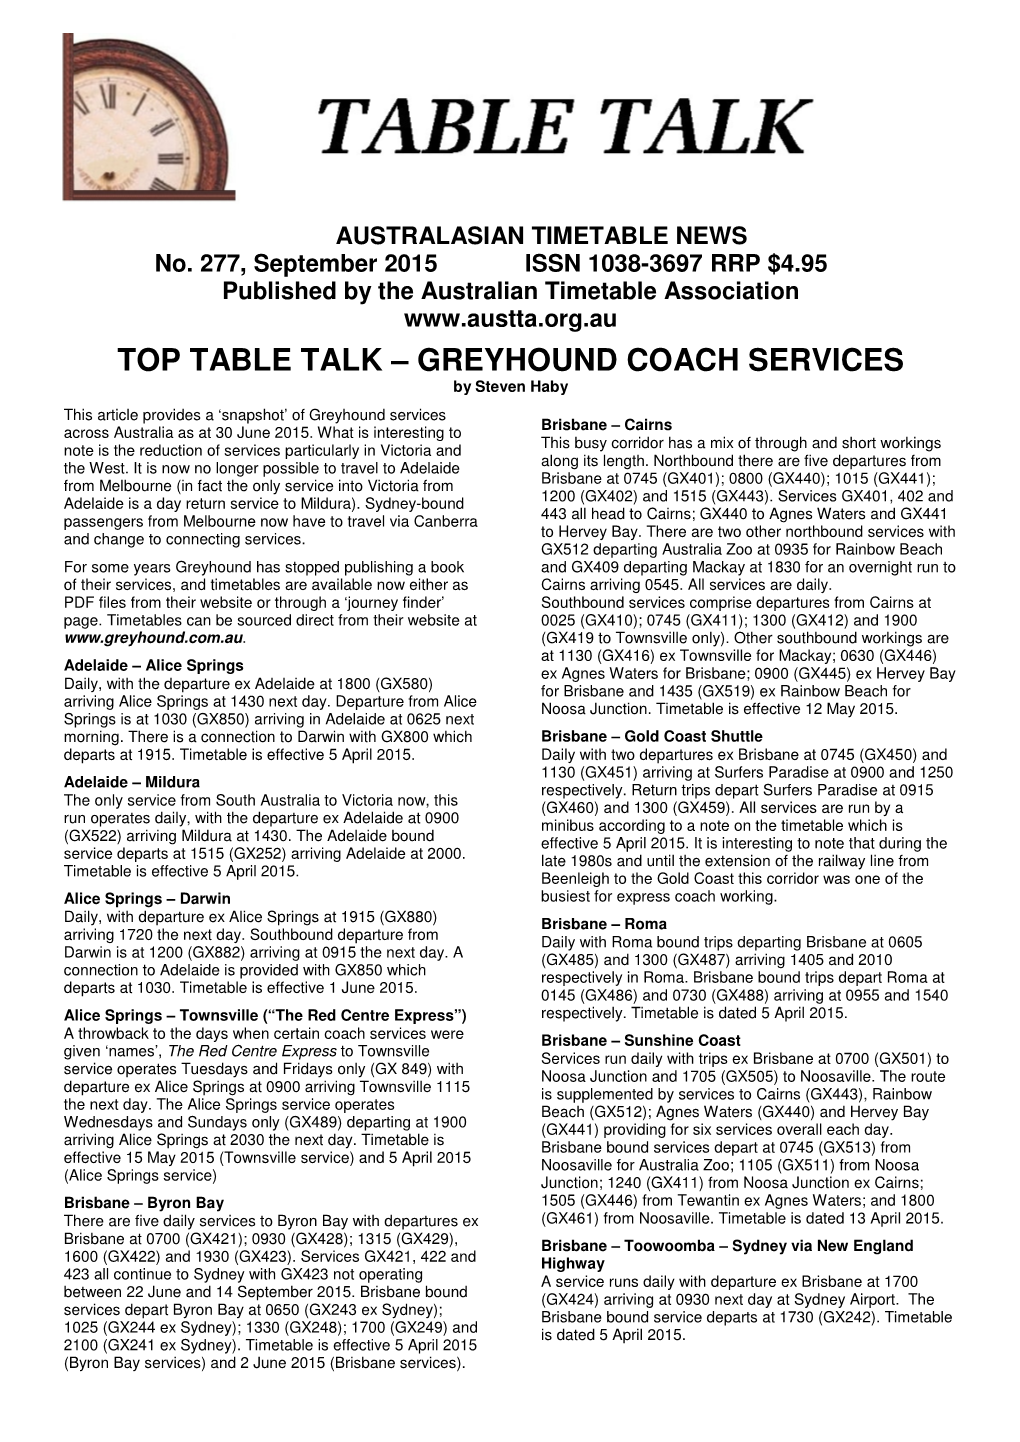 Top Table Talk – Greyhound Coach Services